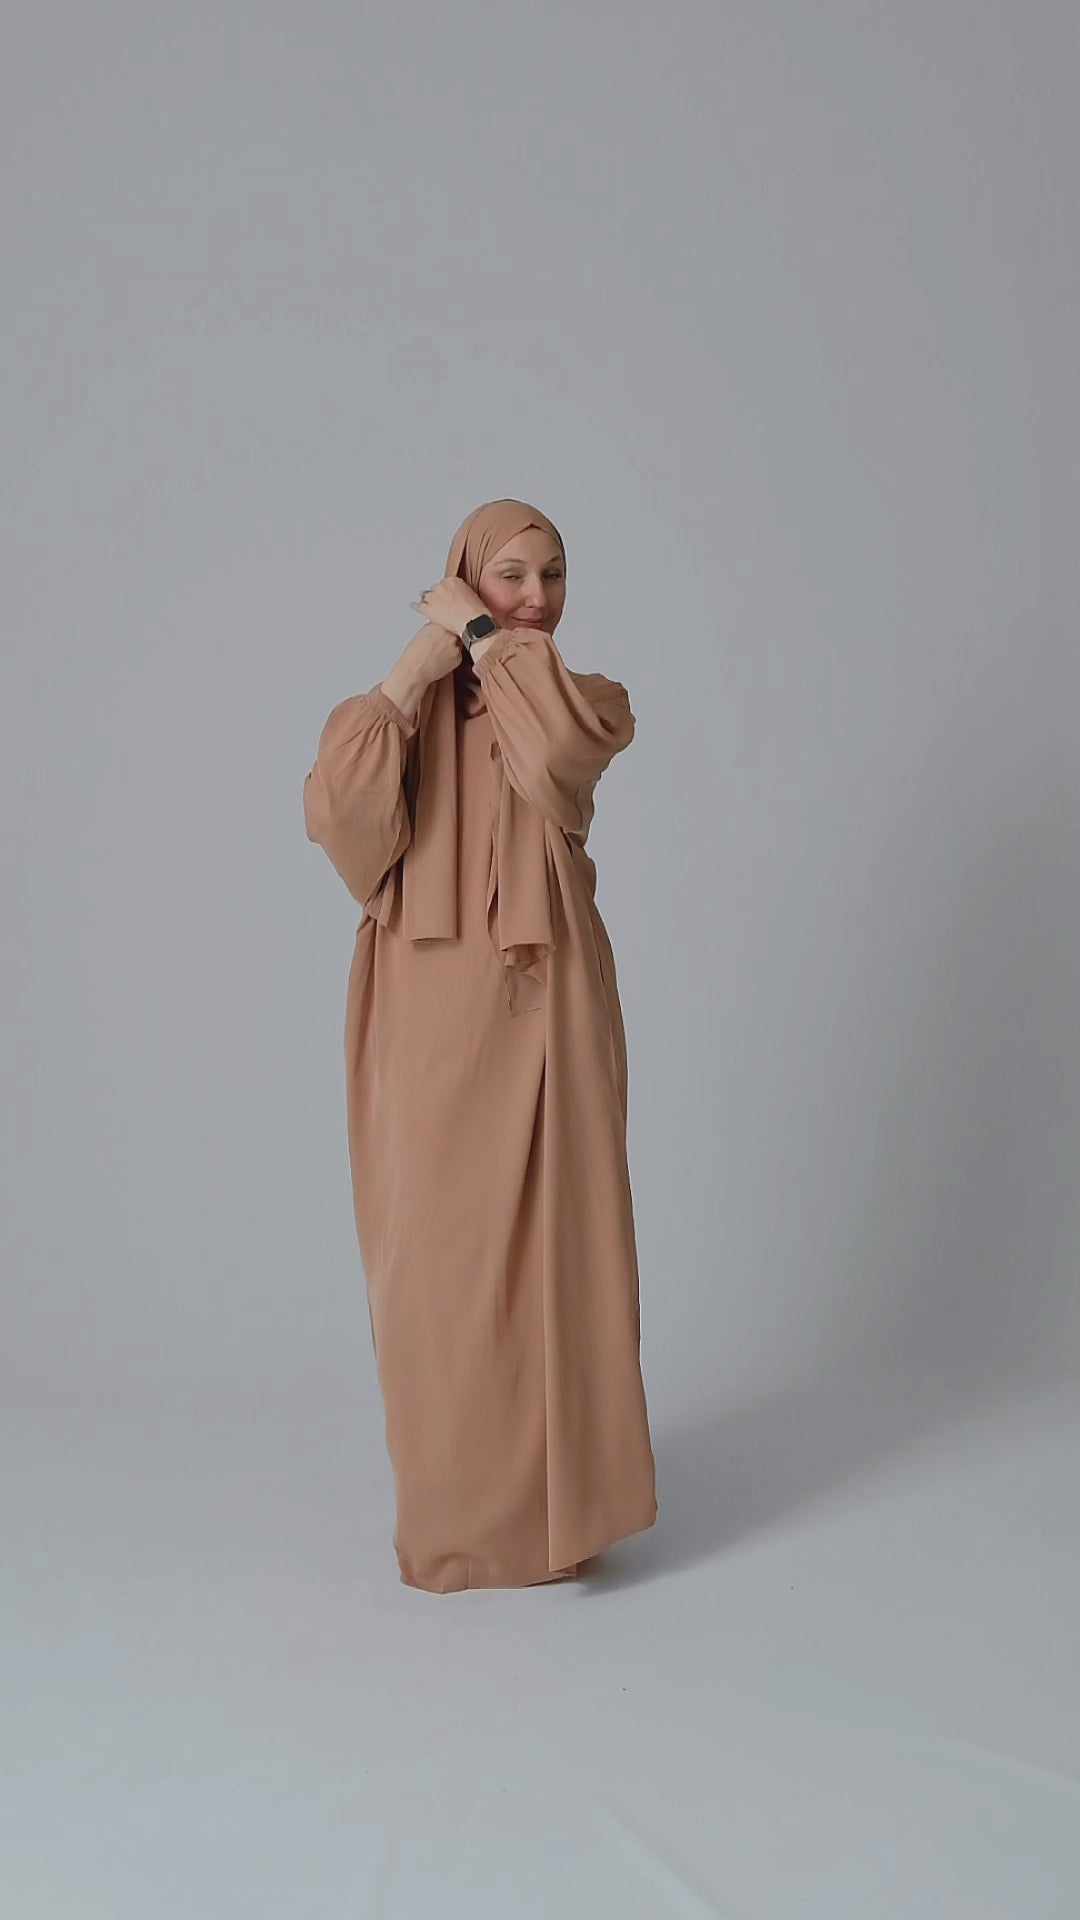 Umrah outfit in brown khaki